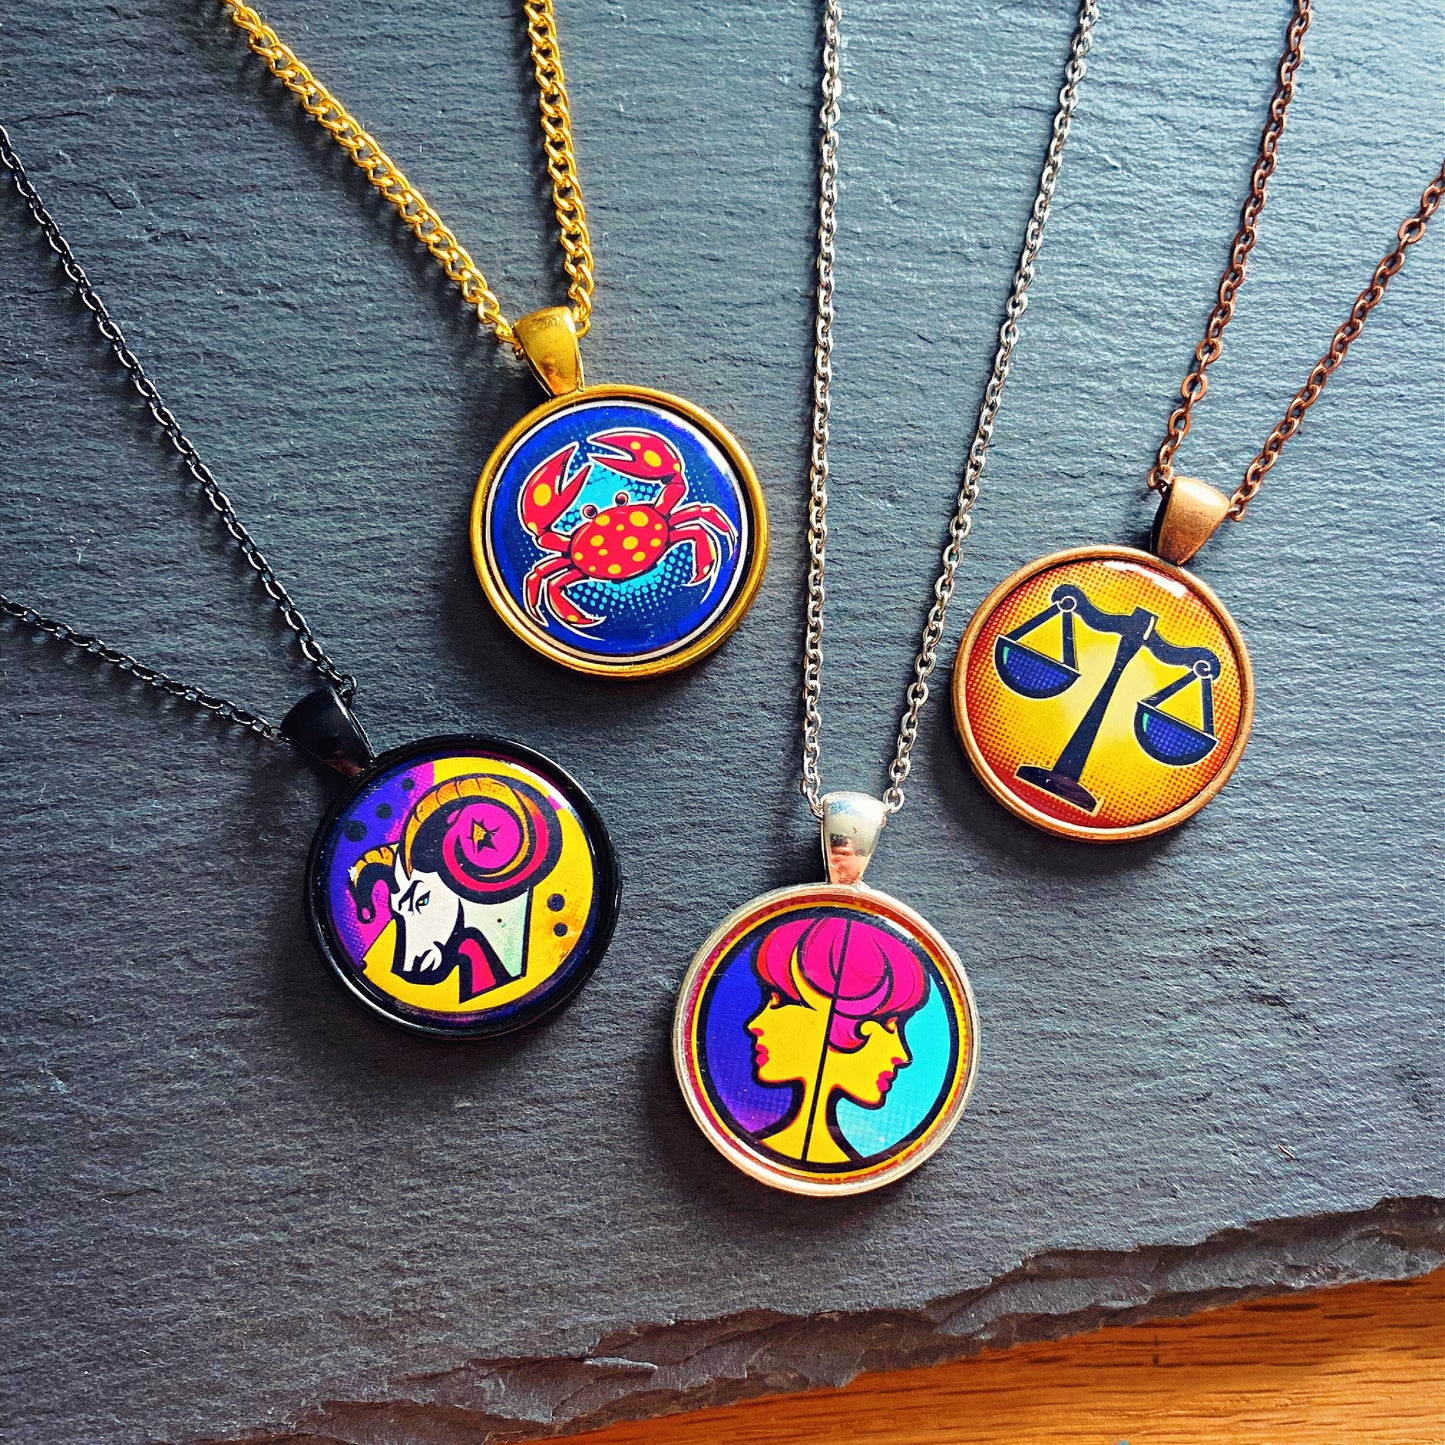 Taurus Earrings. Horoscope Symbol Necklace. Zodiac Sign Jewellery. Astrology Earrings. Pop Art Colourful Pendant. Star Sign Gift. Bull.